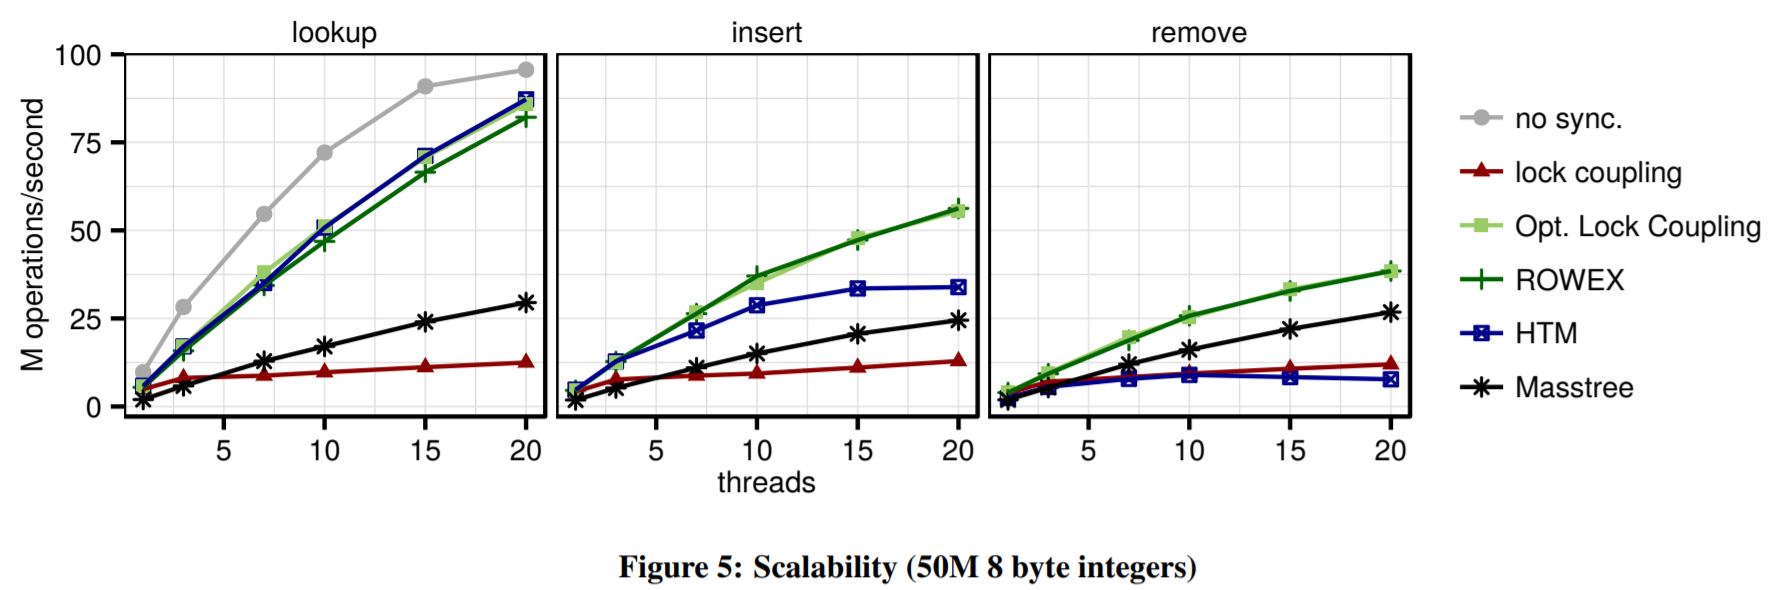 Comparison of serval concurrency schemas